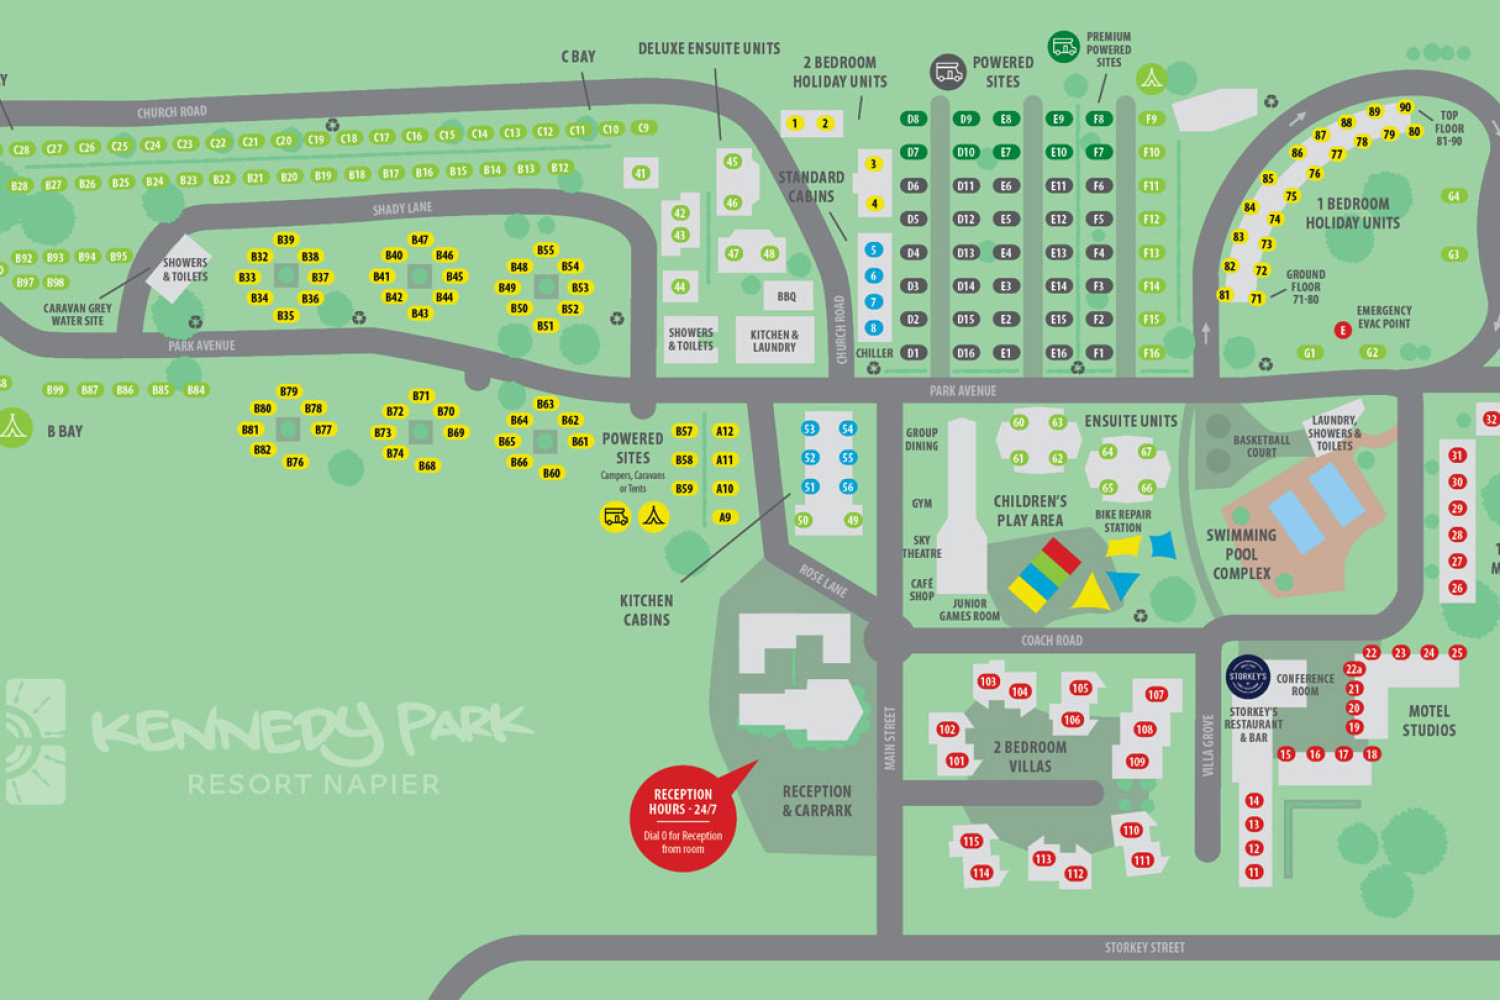 Kennedy Park Map